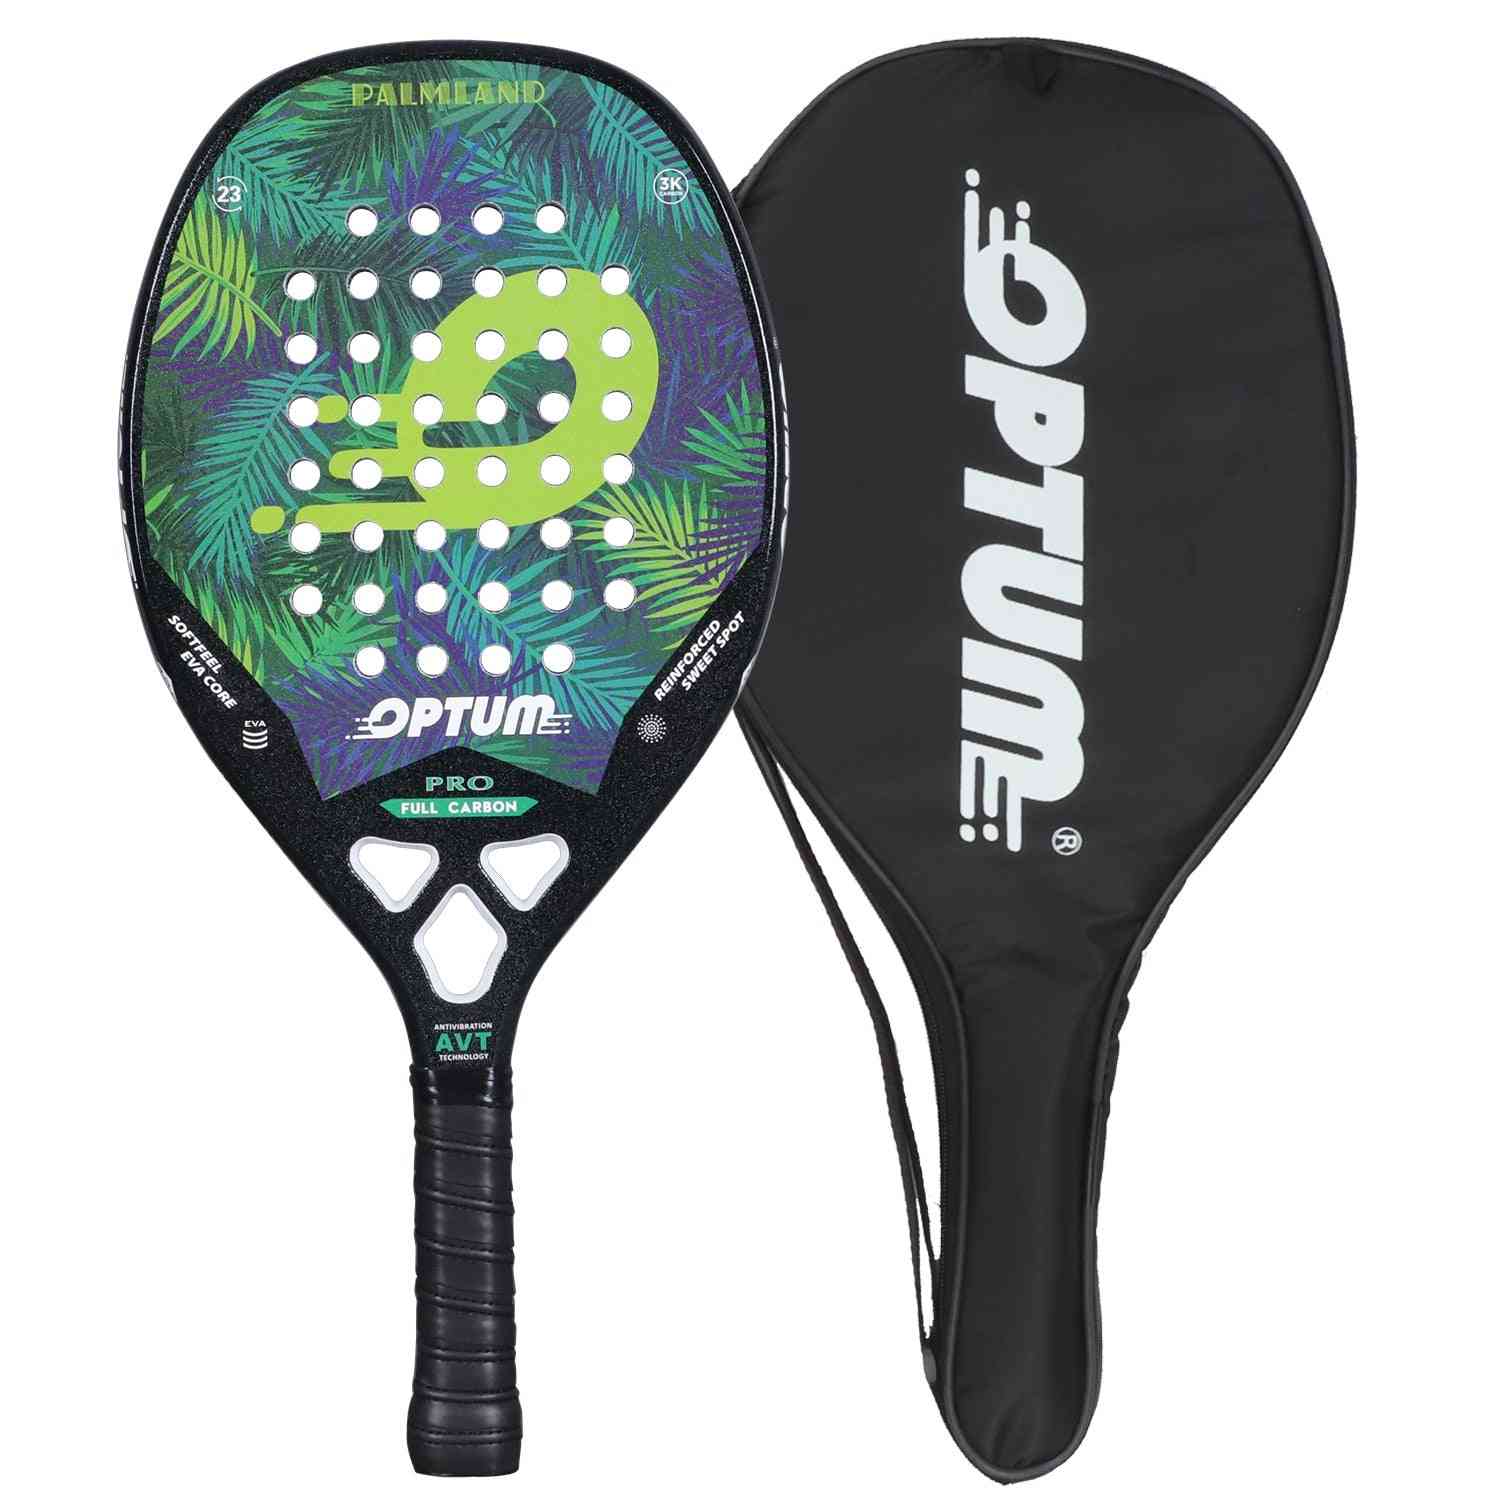 3k Carbon Fiber Rough Surface Beach Tennis Racket With Cover Bag